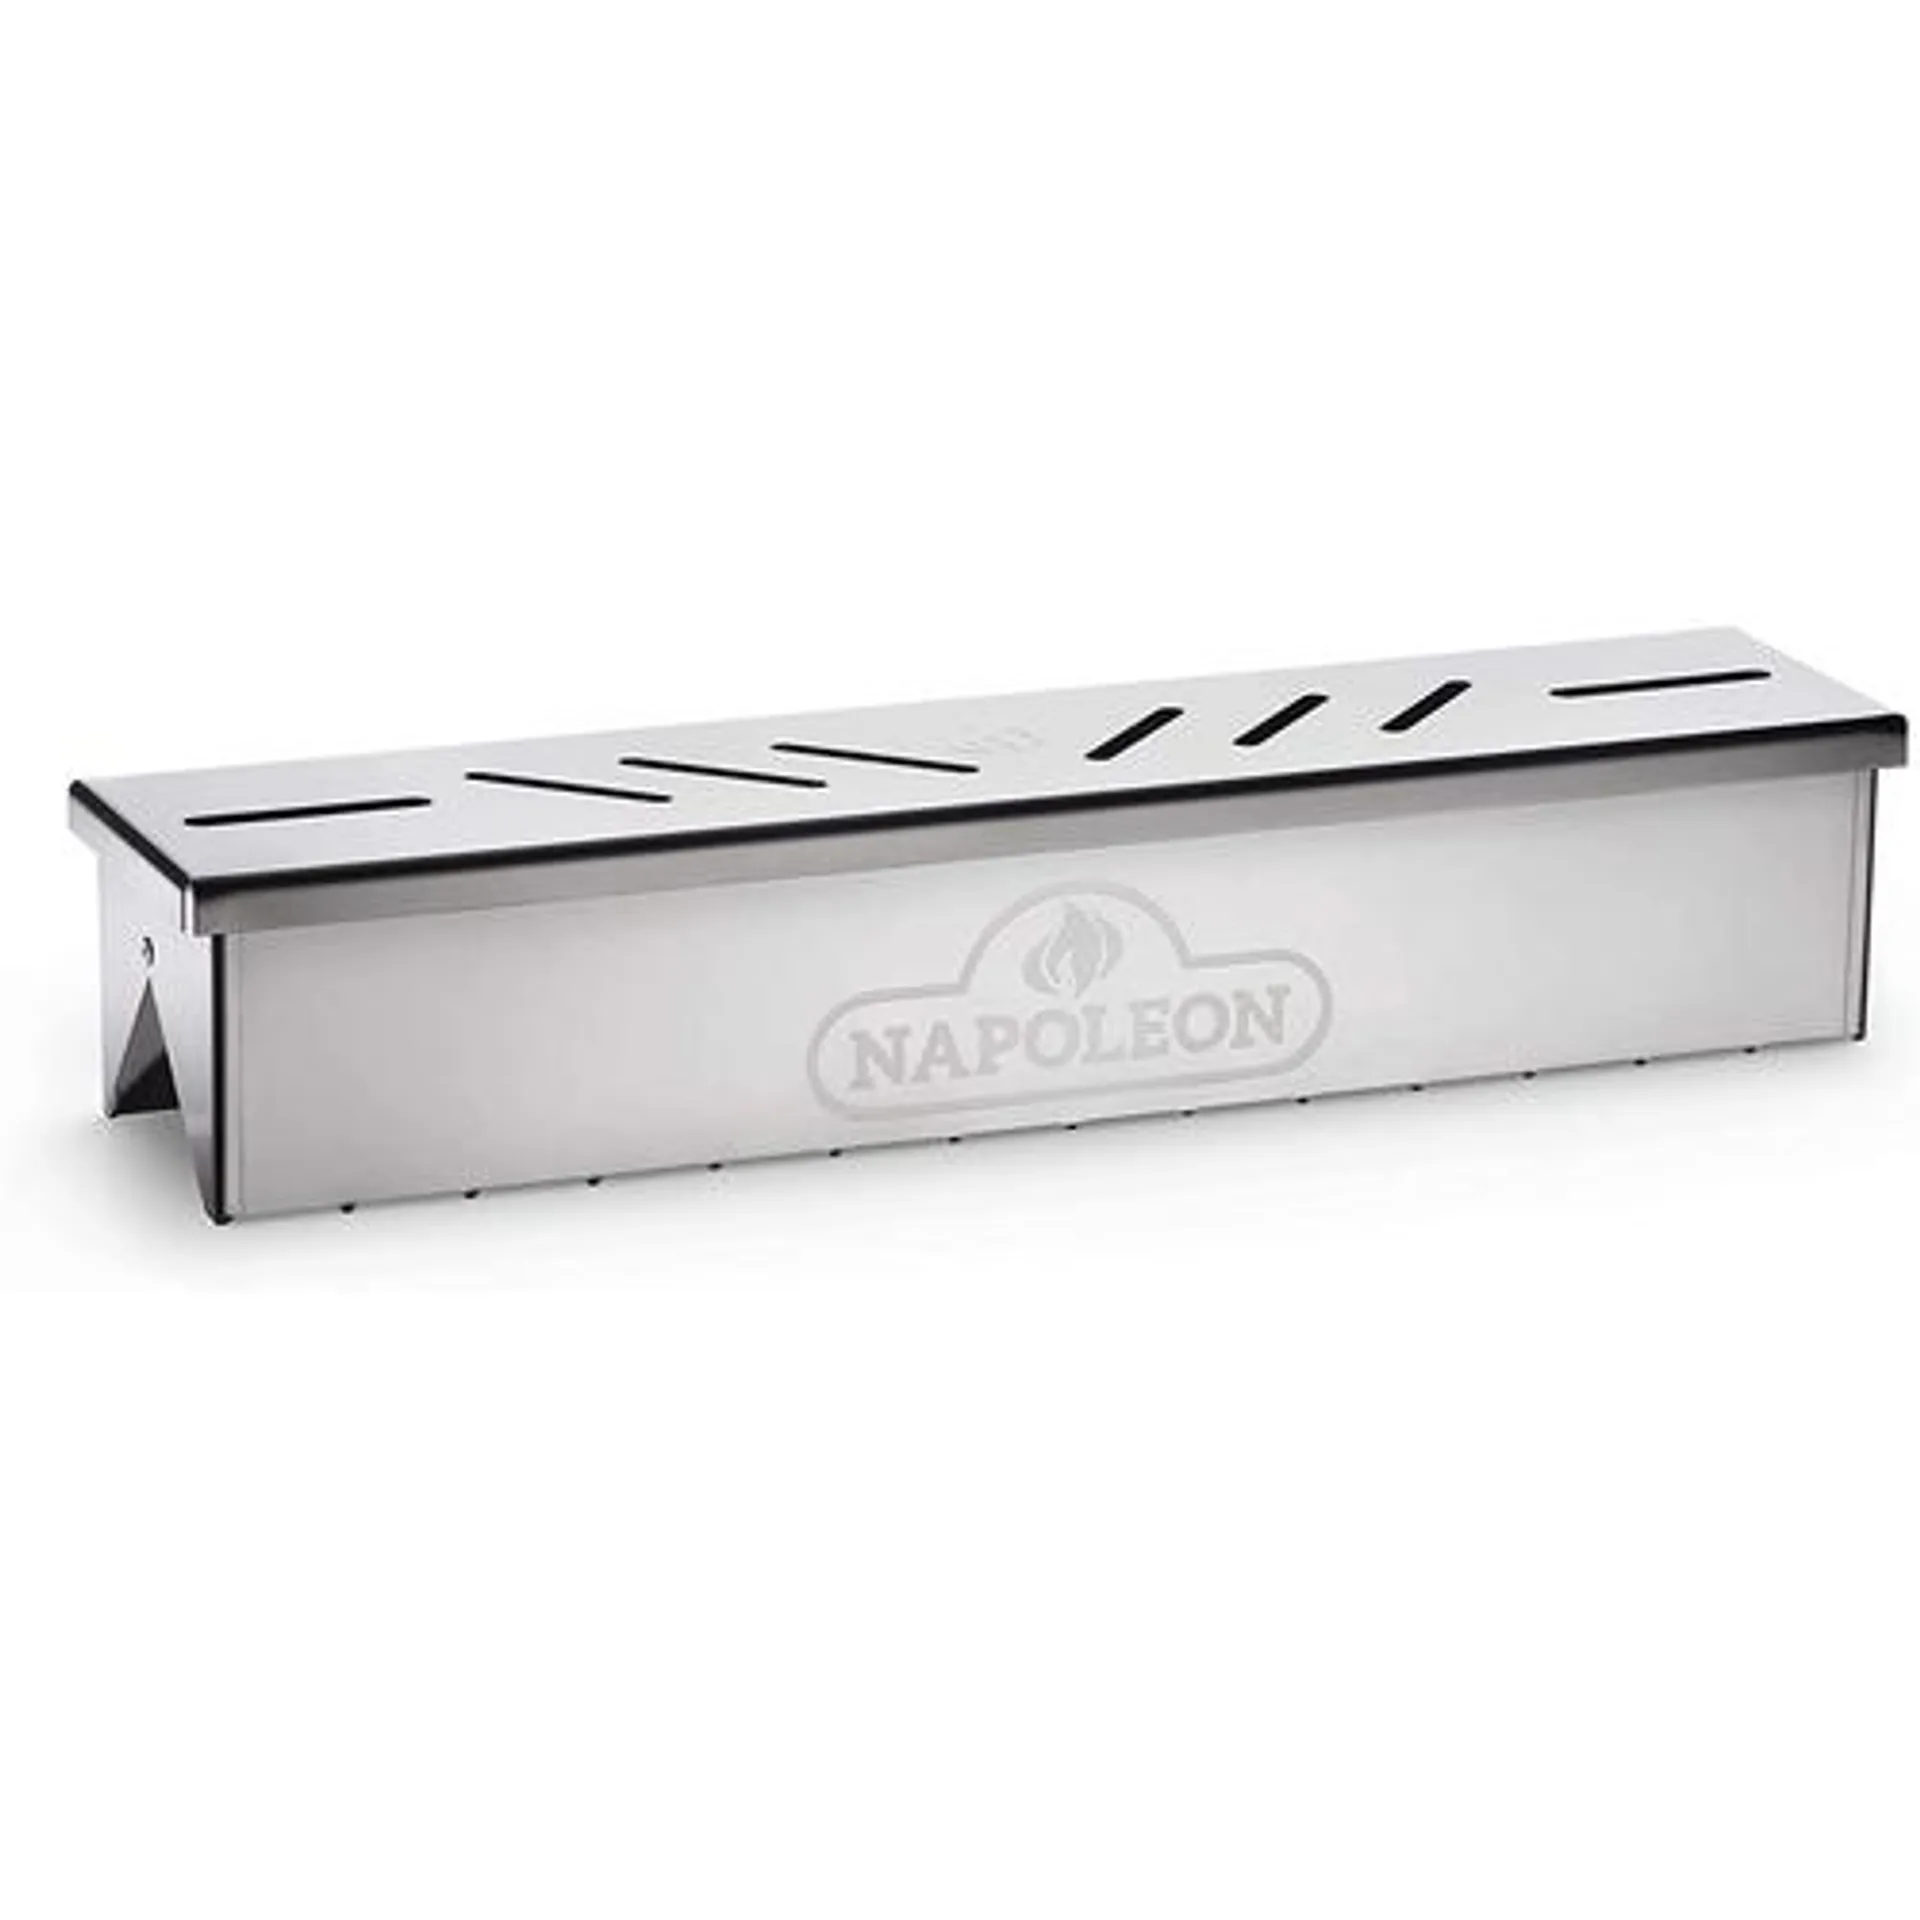 Napoleon Stainless Steel Smoker Box for Prestige/Prestige PRO/Rogue Series Gas Grills